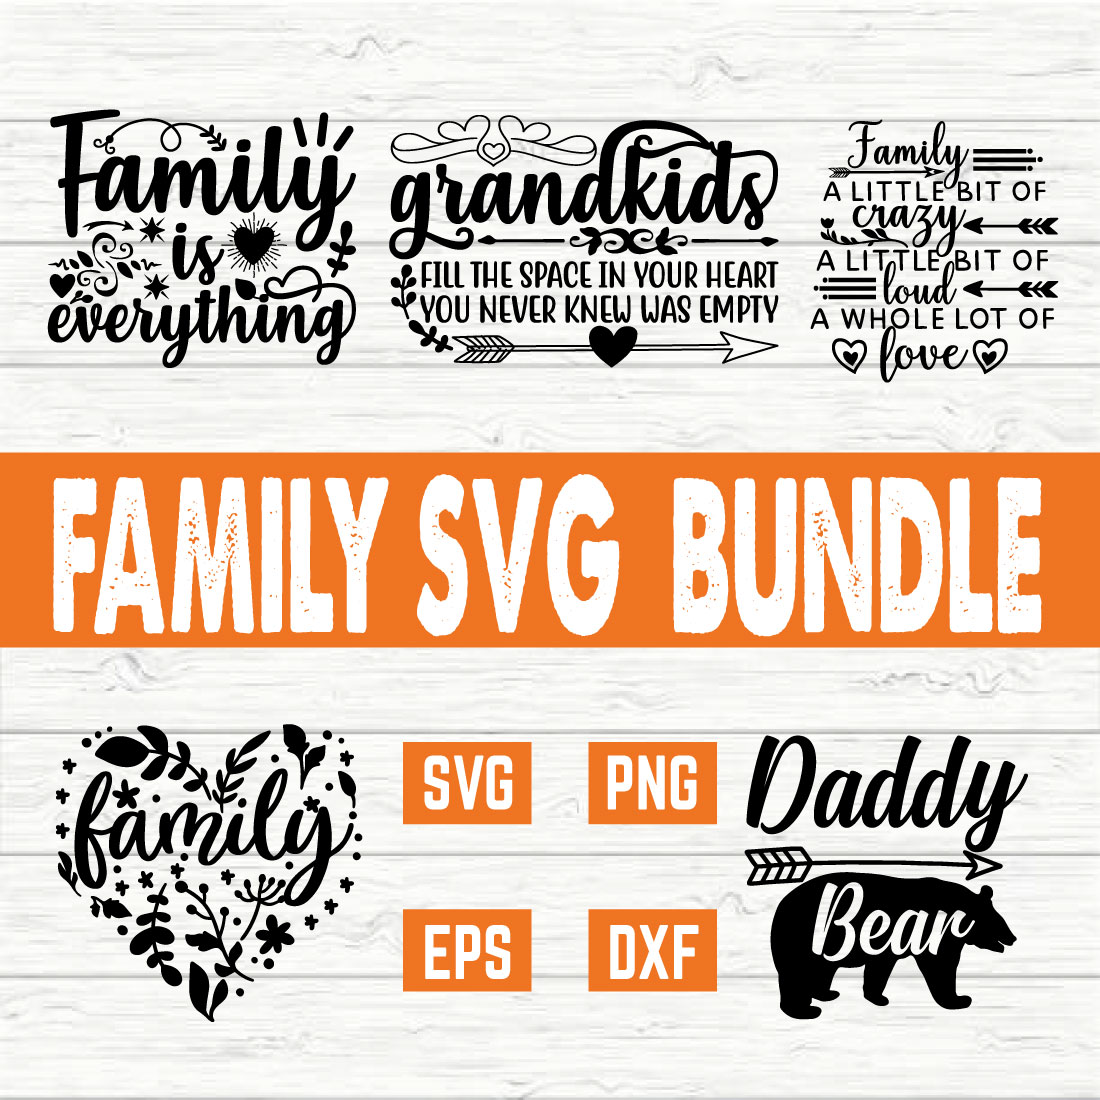 Family Svg Bundle vol 2 cover image.